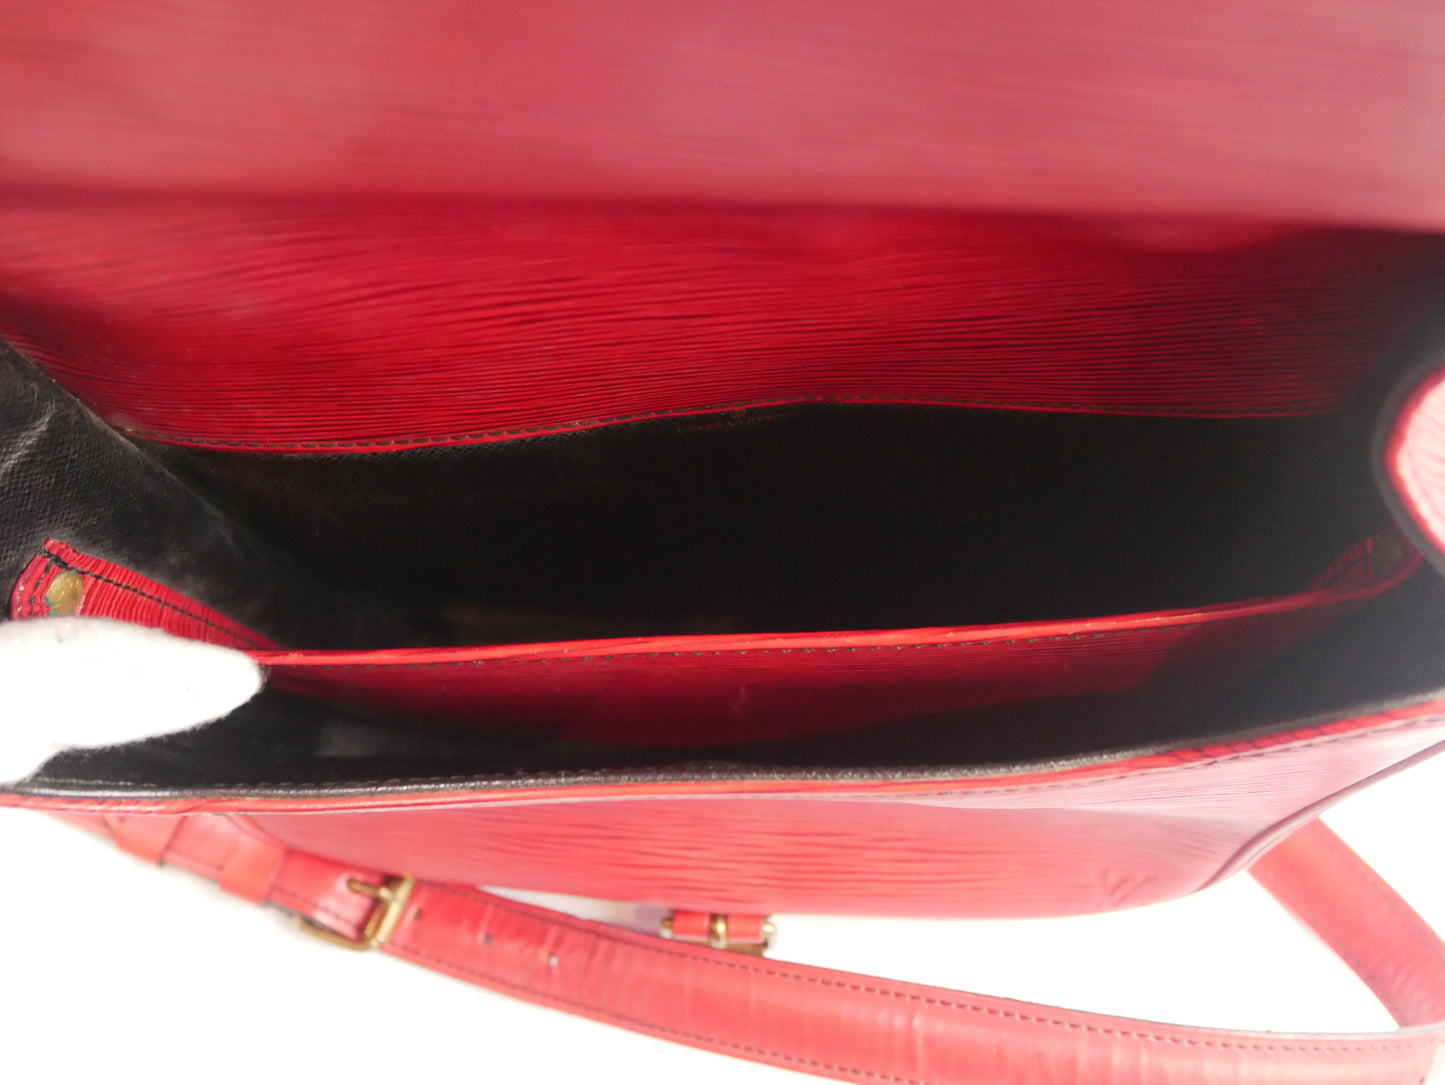 <tc>Sac cartable Louis Vuitton rouge</tc>